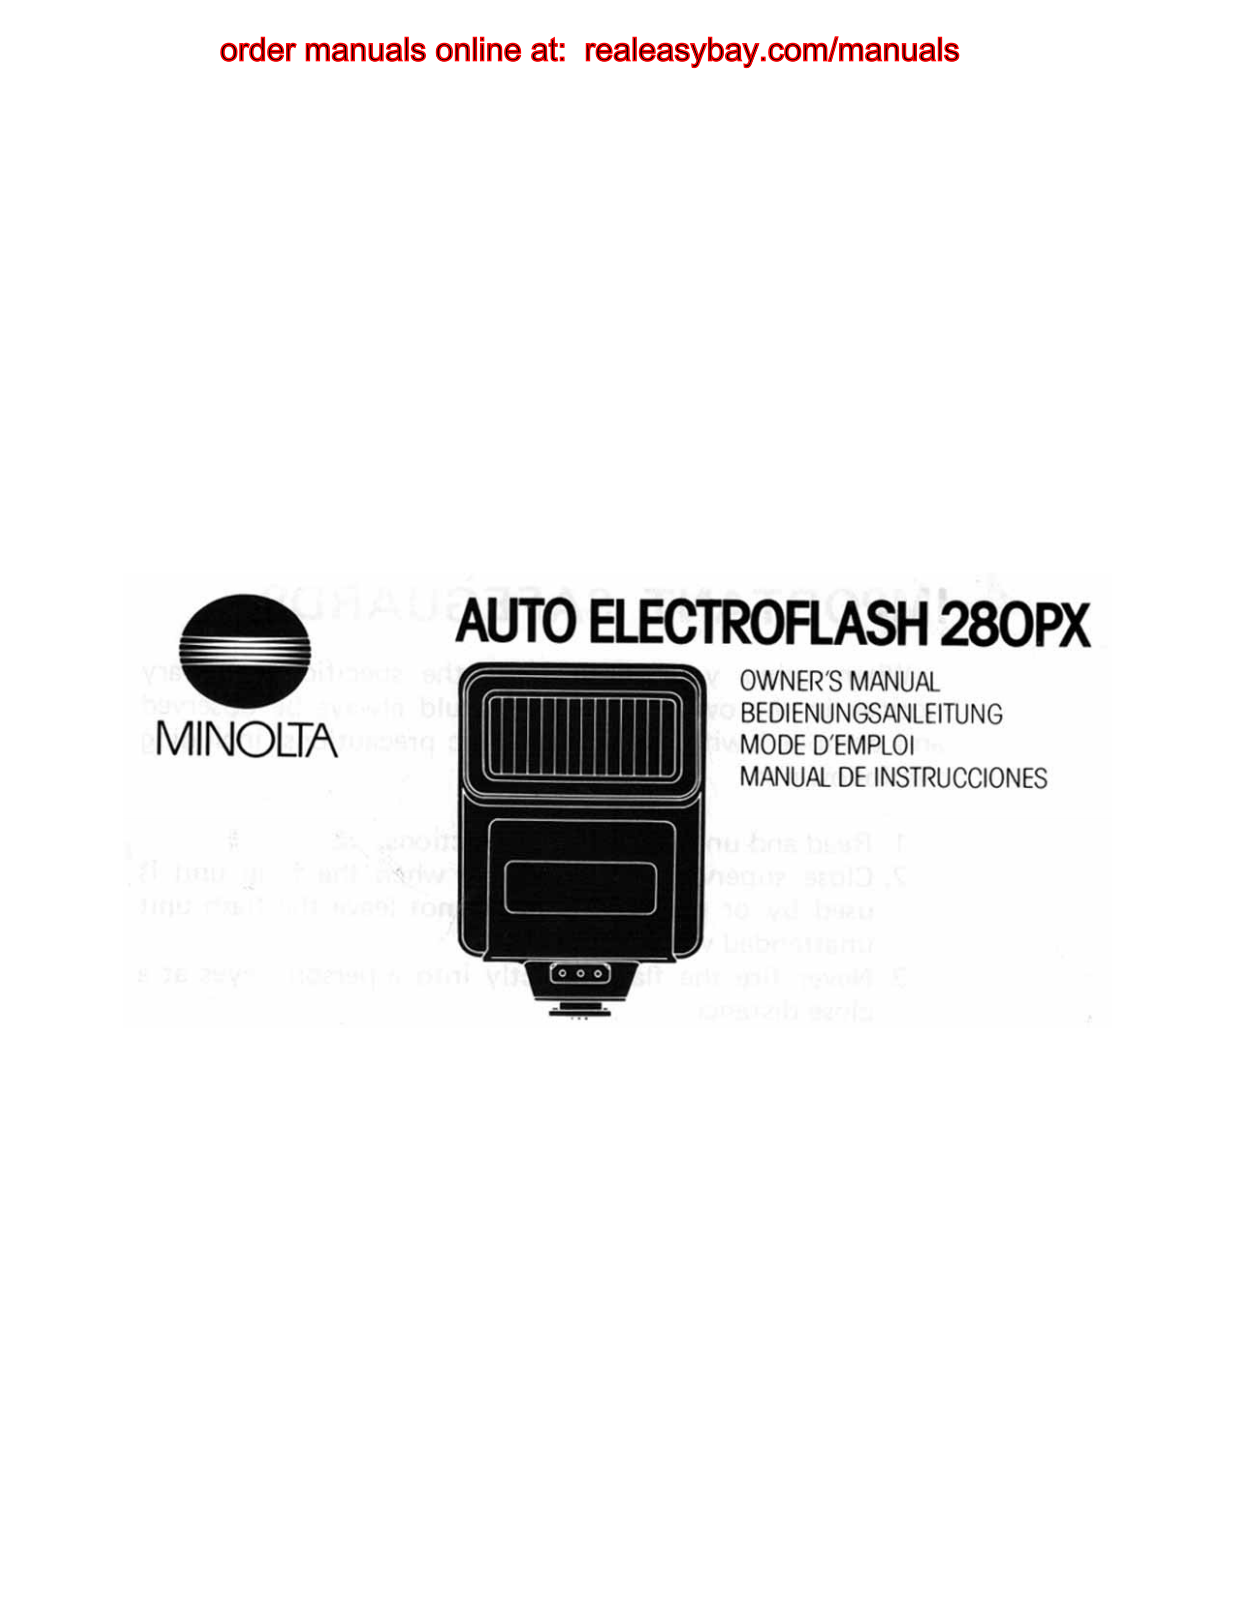 Minolta AUTO ELECTROFLASH 280PX owners Manual